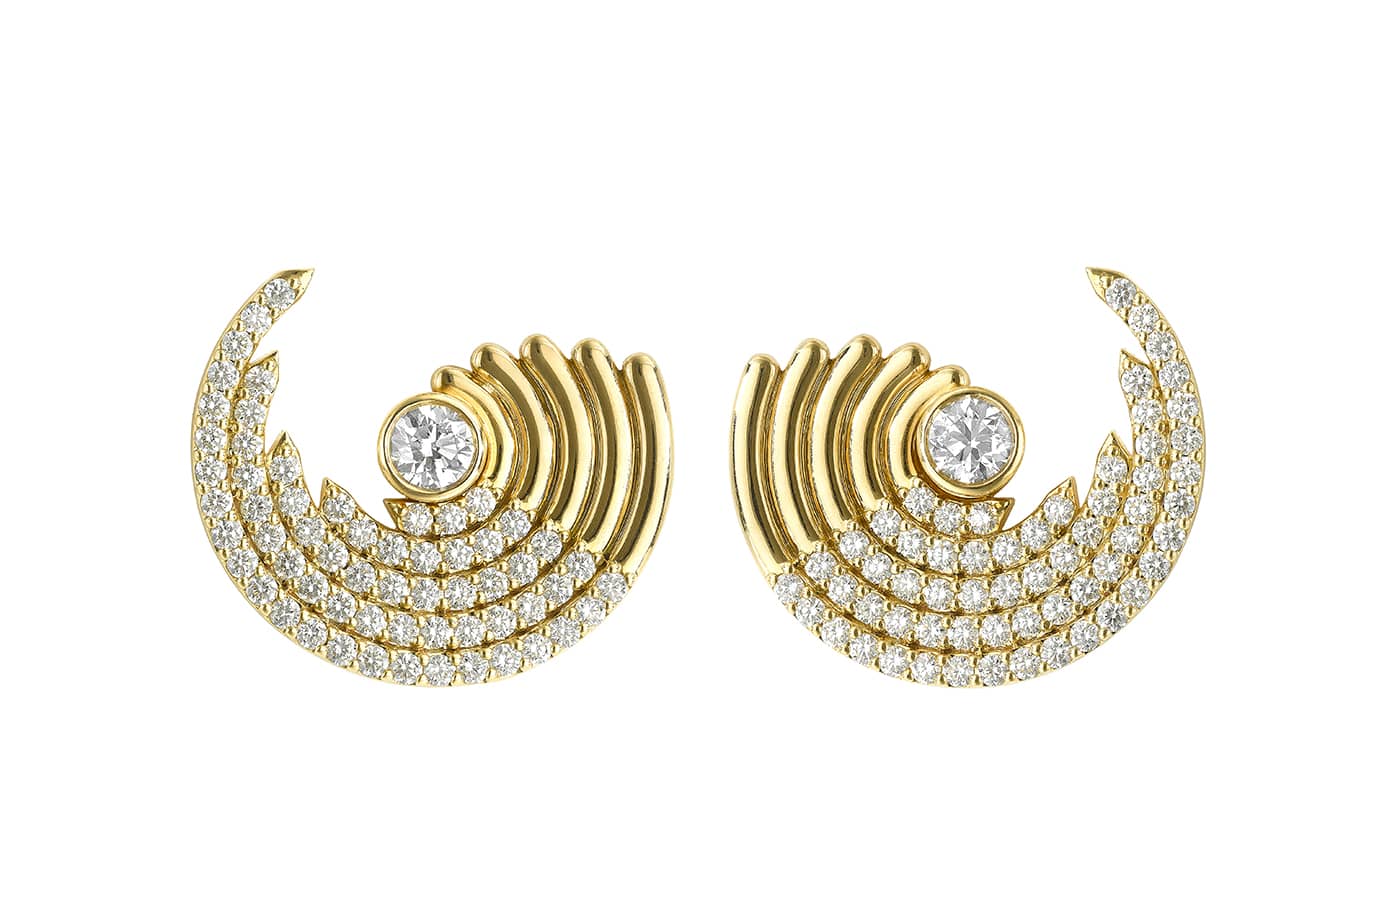 Robinson Pelham Zouk large diamond earrings with 2.90 carats of diamonds in 18k yellow gold 